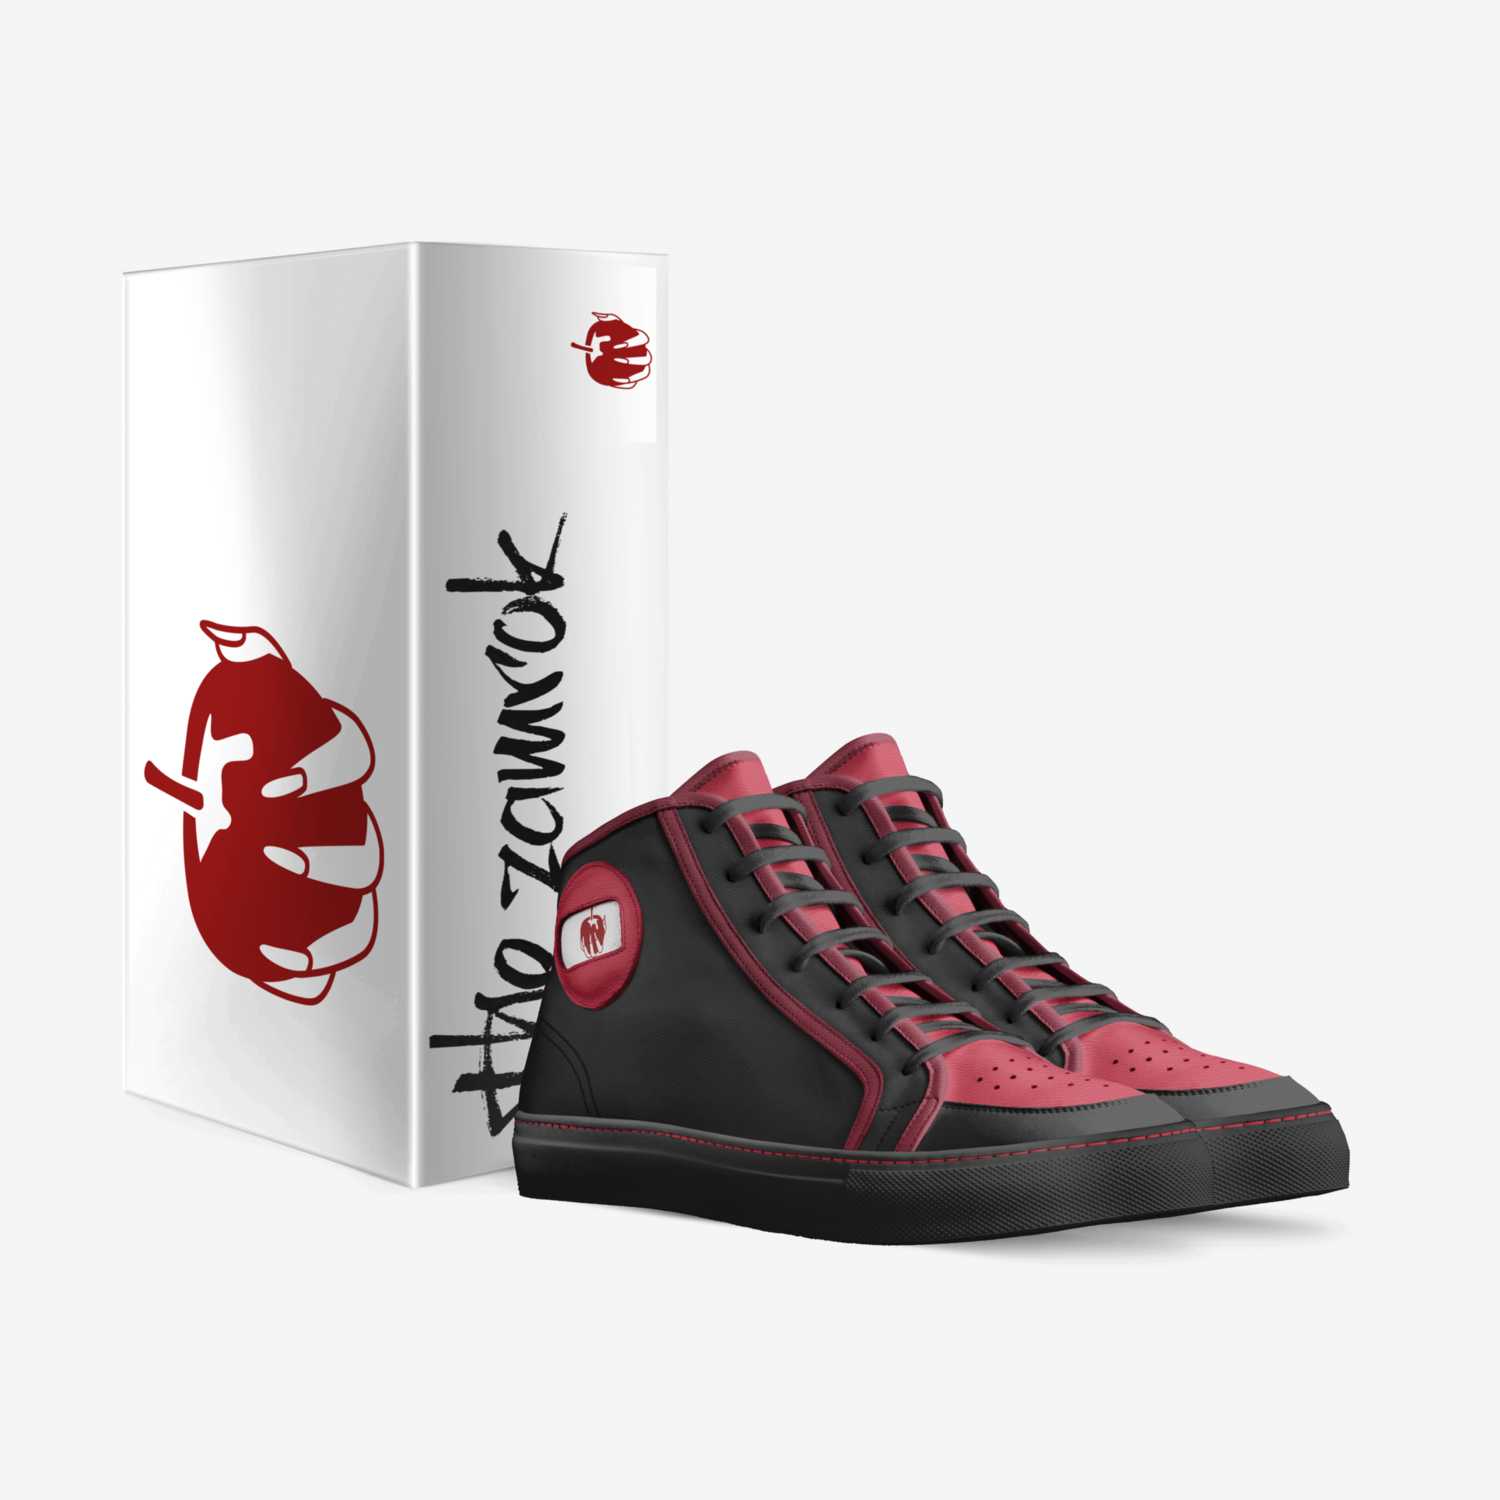 The Zamrok custom made in Italy shoes by Jennifer Zamrok | Box view